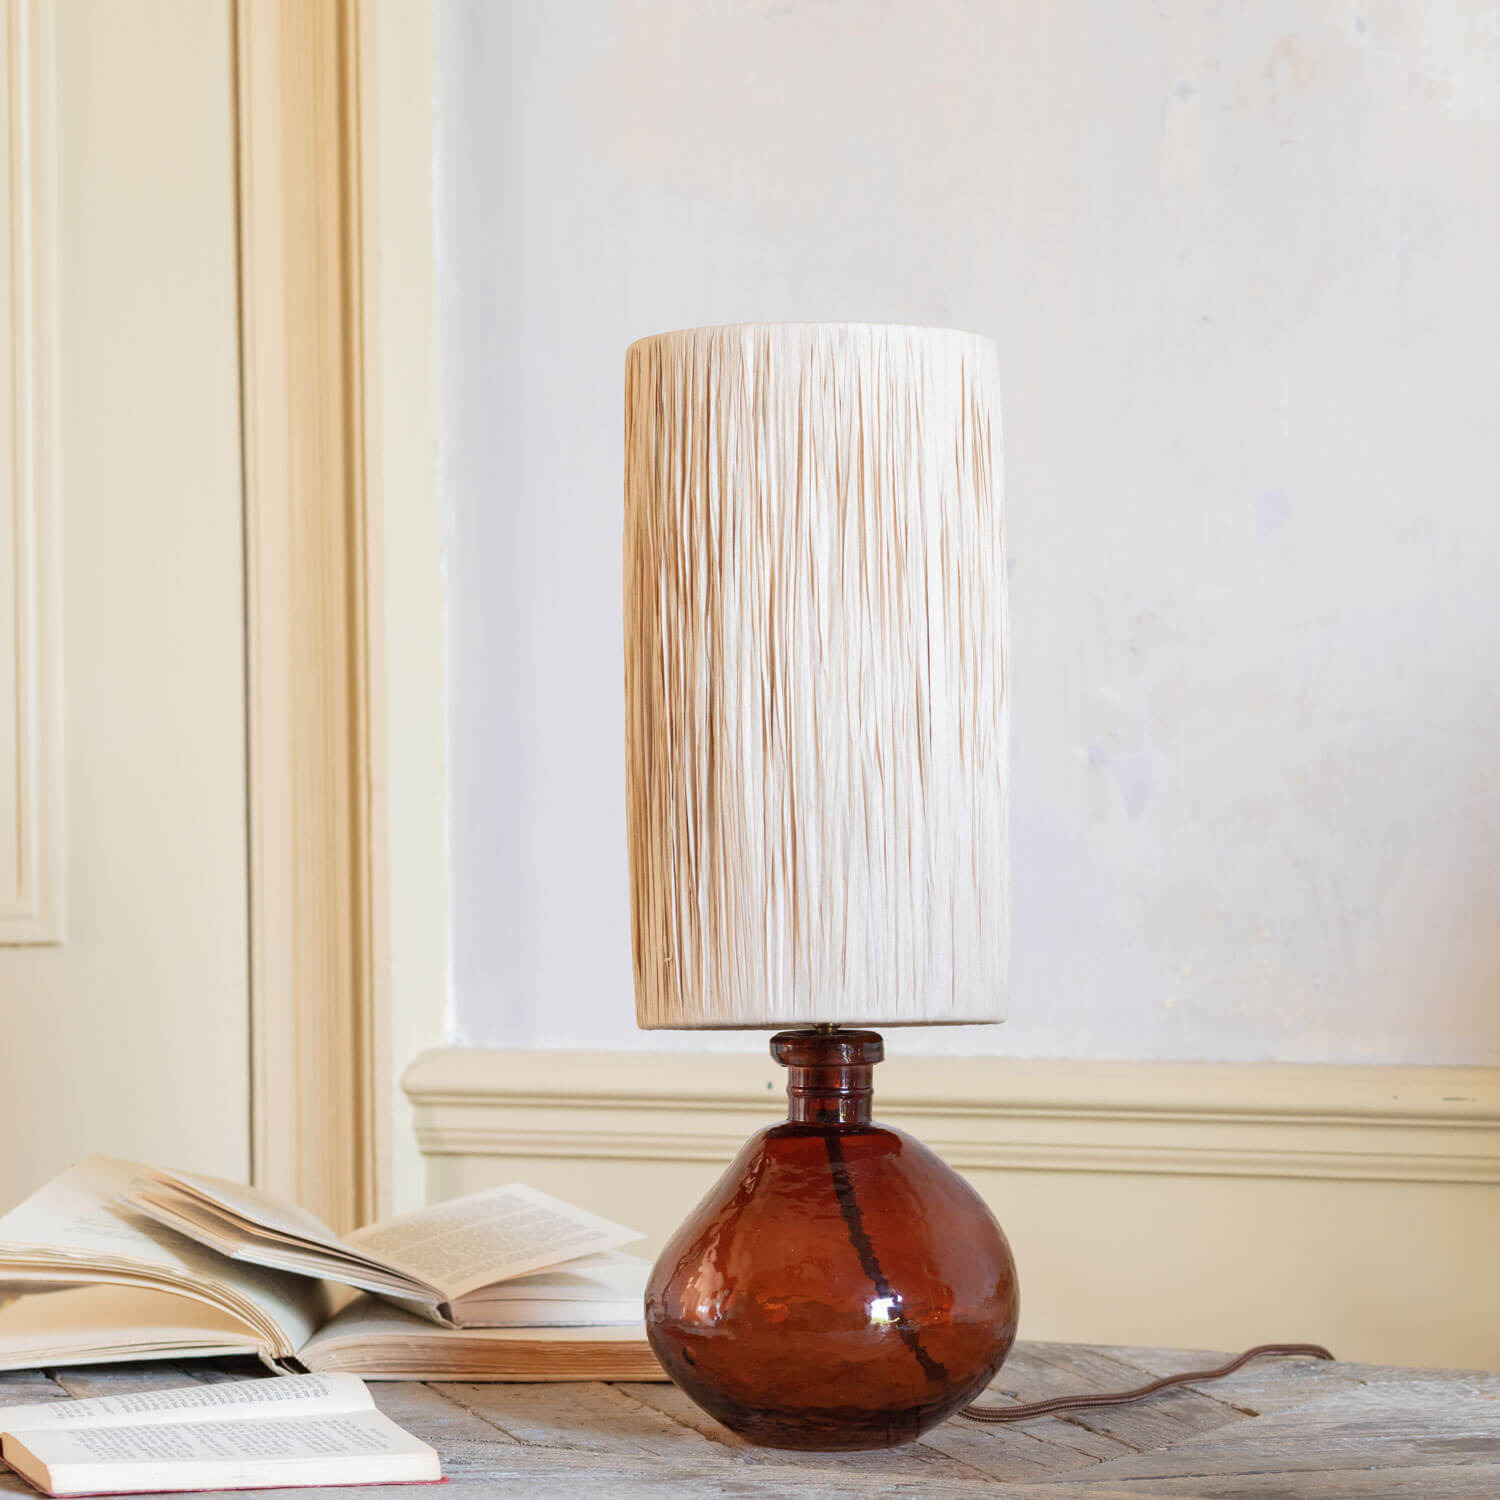 Lennox Dark Amber Table Lamp with Shade - image 1